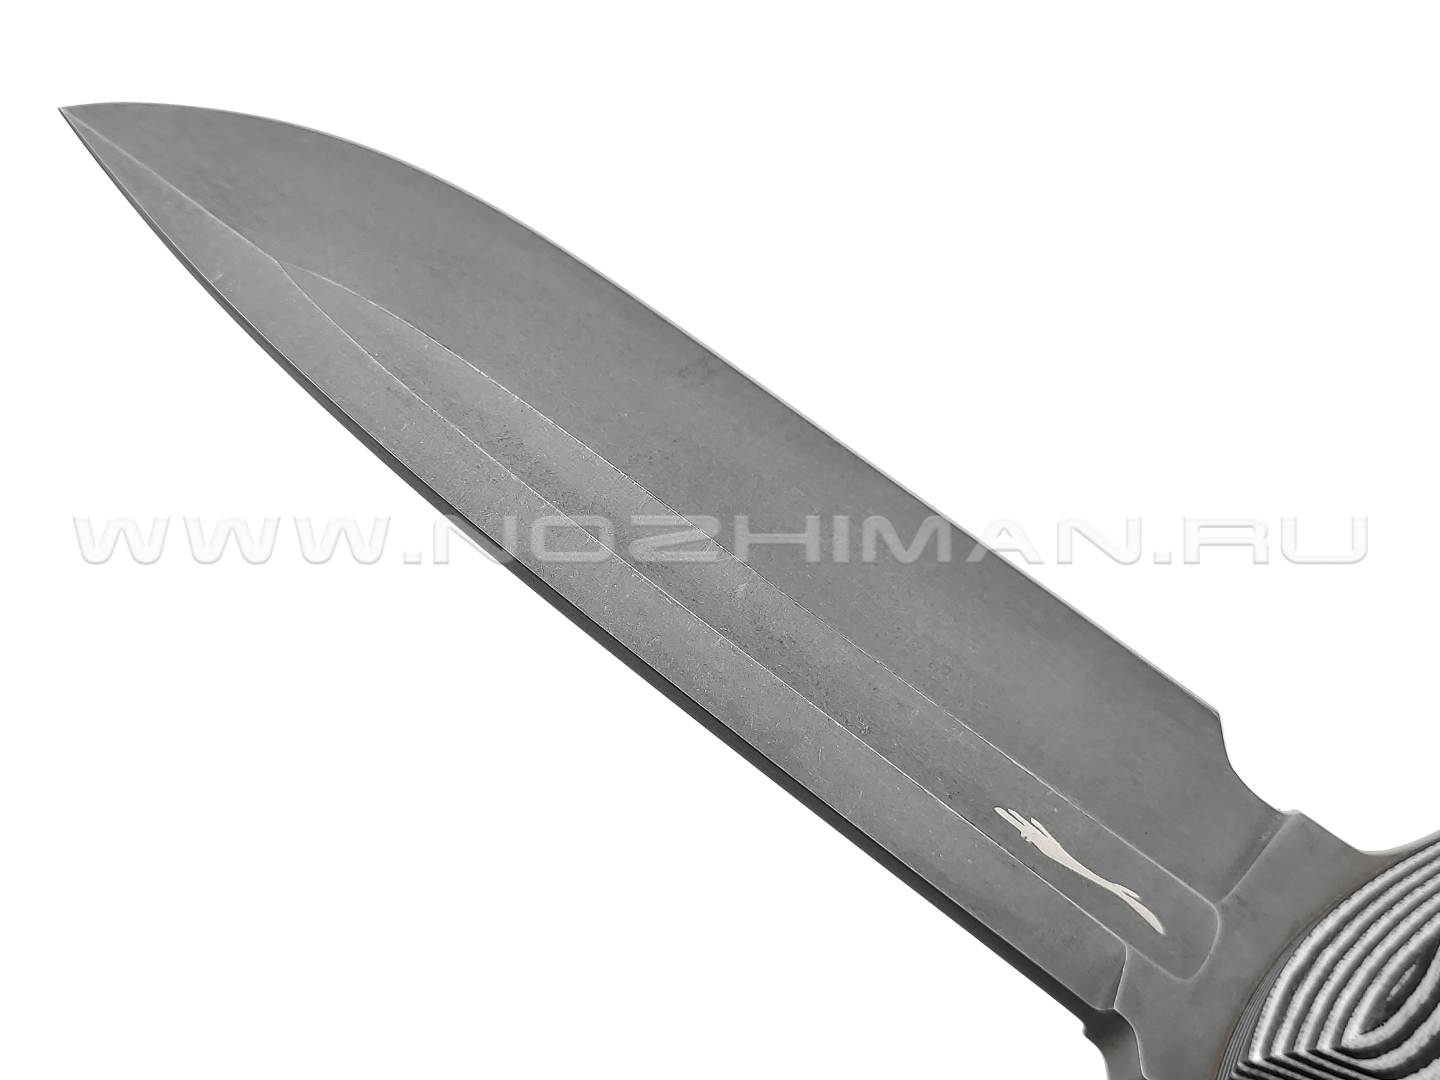 Волчий Век нож Команданте Tactical Edition сталь PGK WA blackwash, рукоять G10 black & white